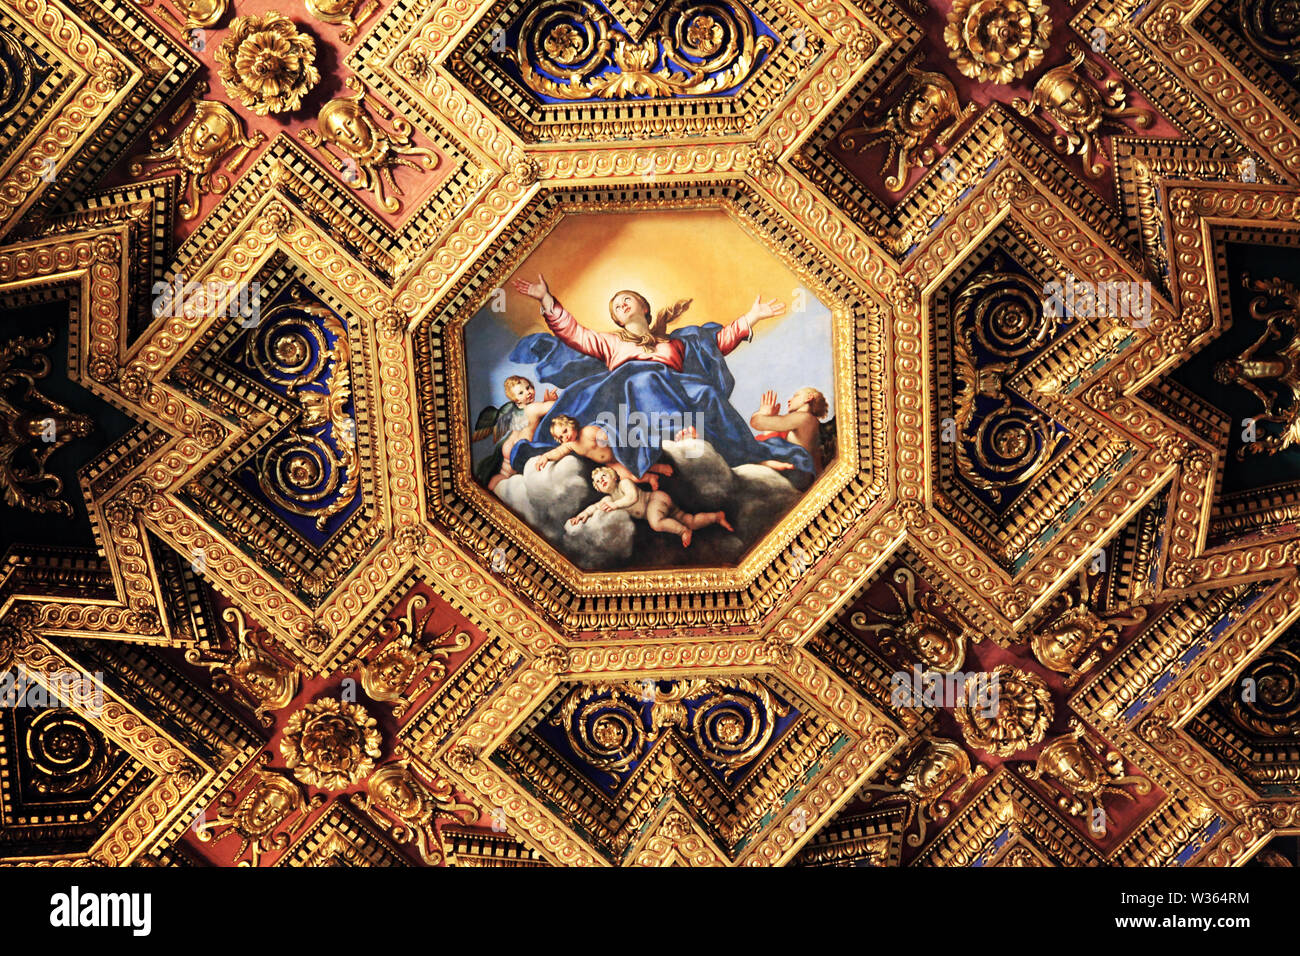 The ornate wooden ceiling of the Basilica di Santa Maria in Trastevere Rome Stock Photo